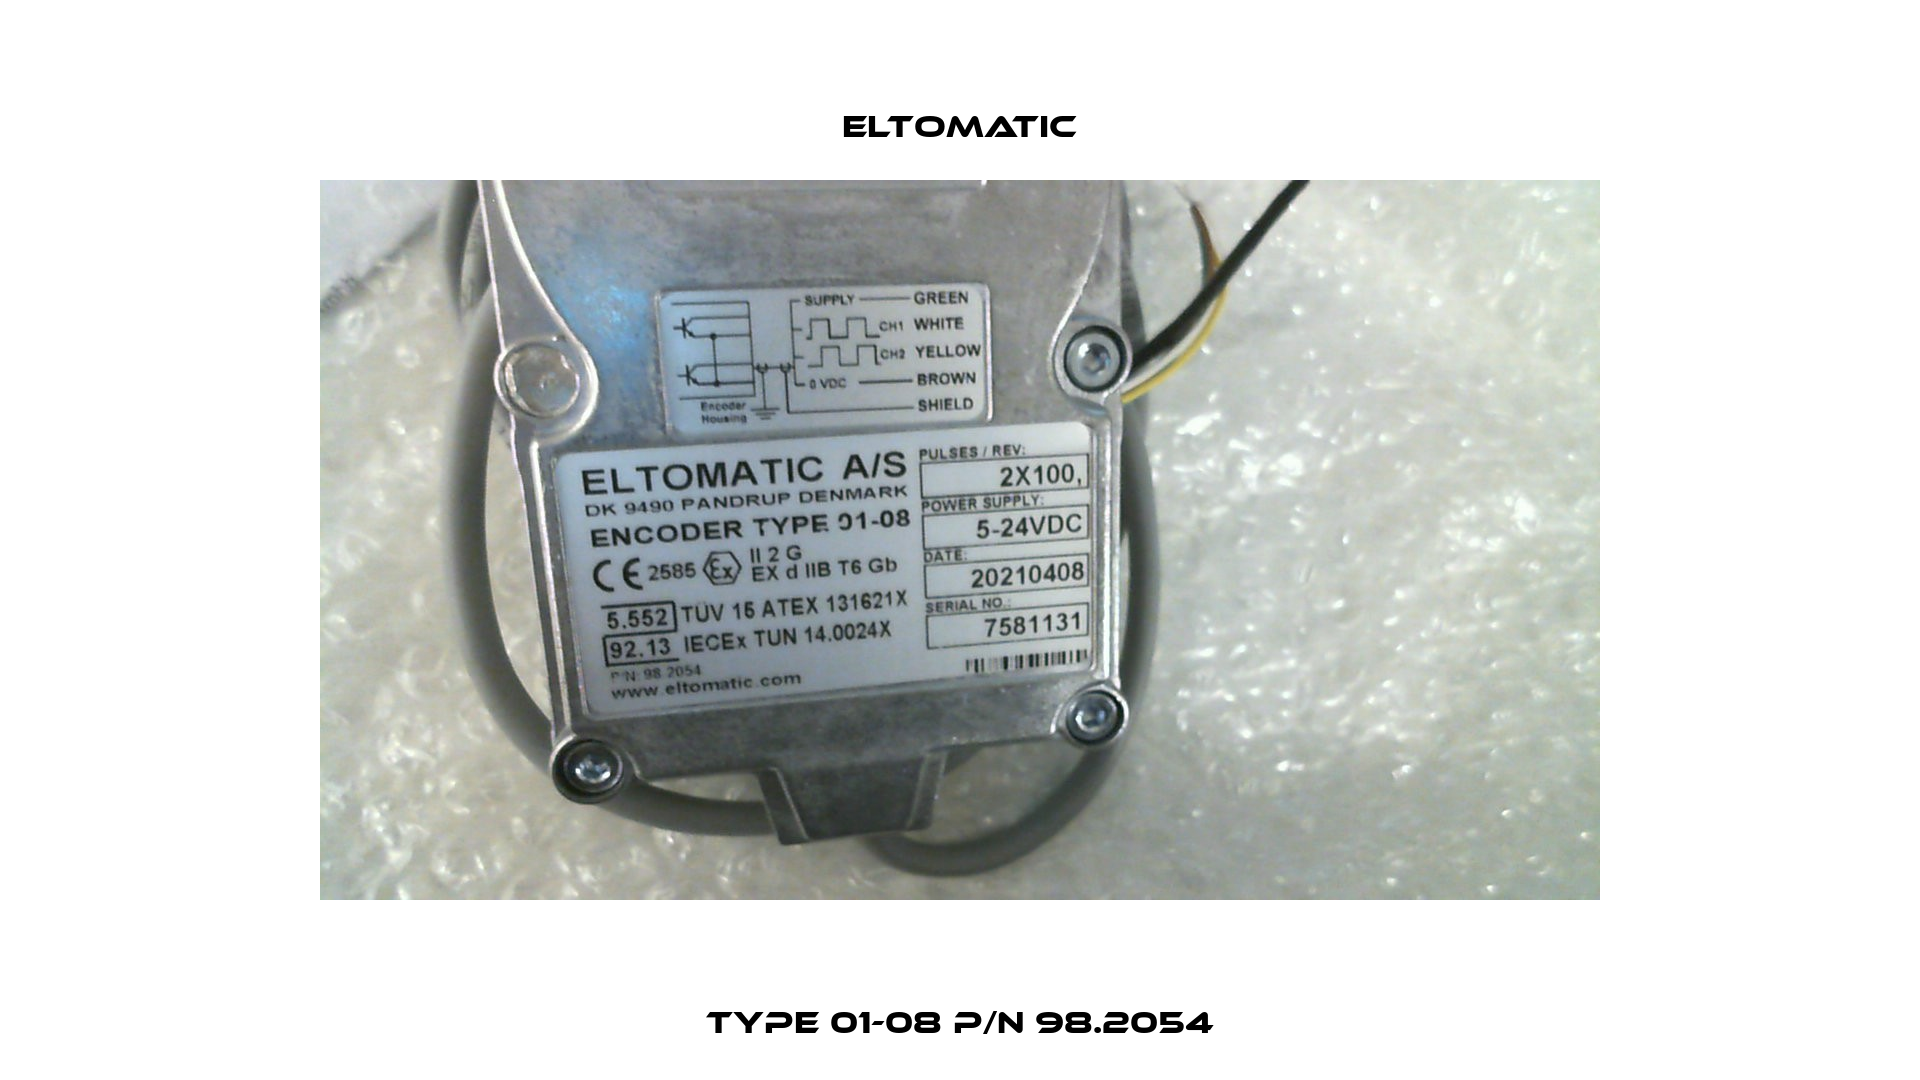 Type 01-08 P/N 98.2054 Eltomatic